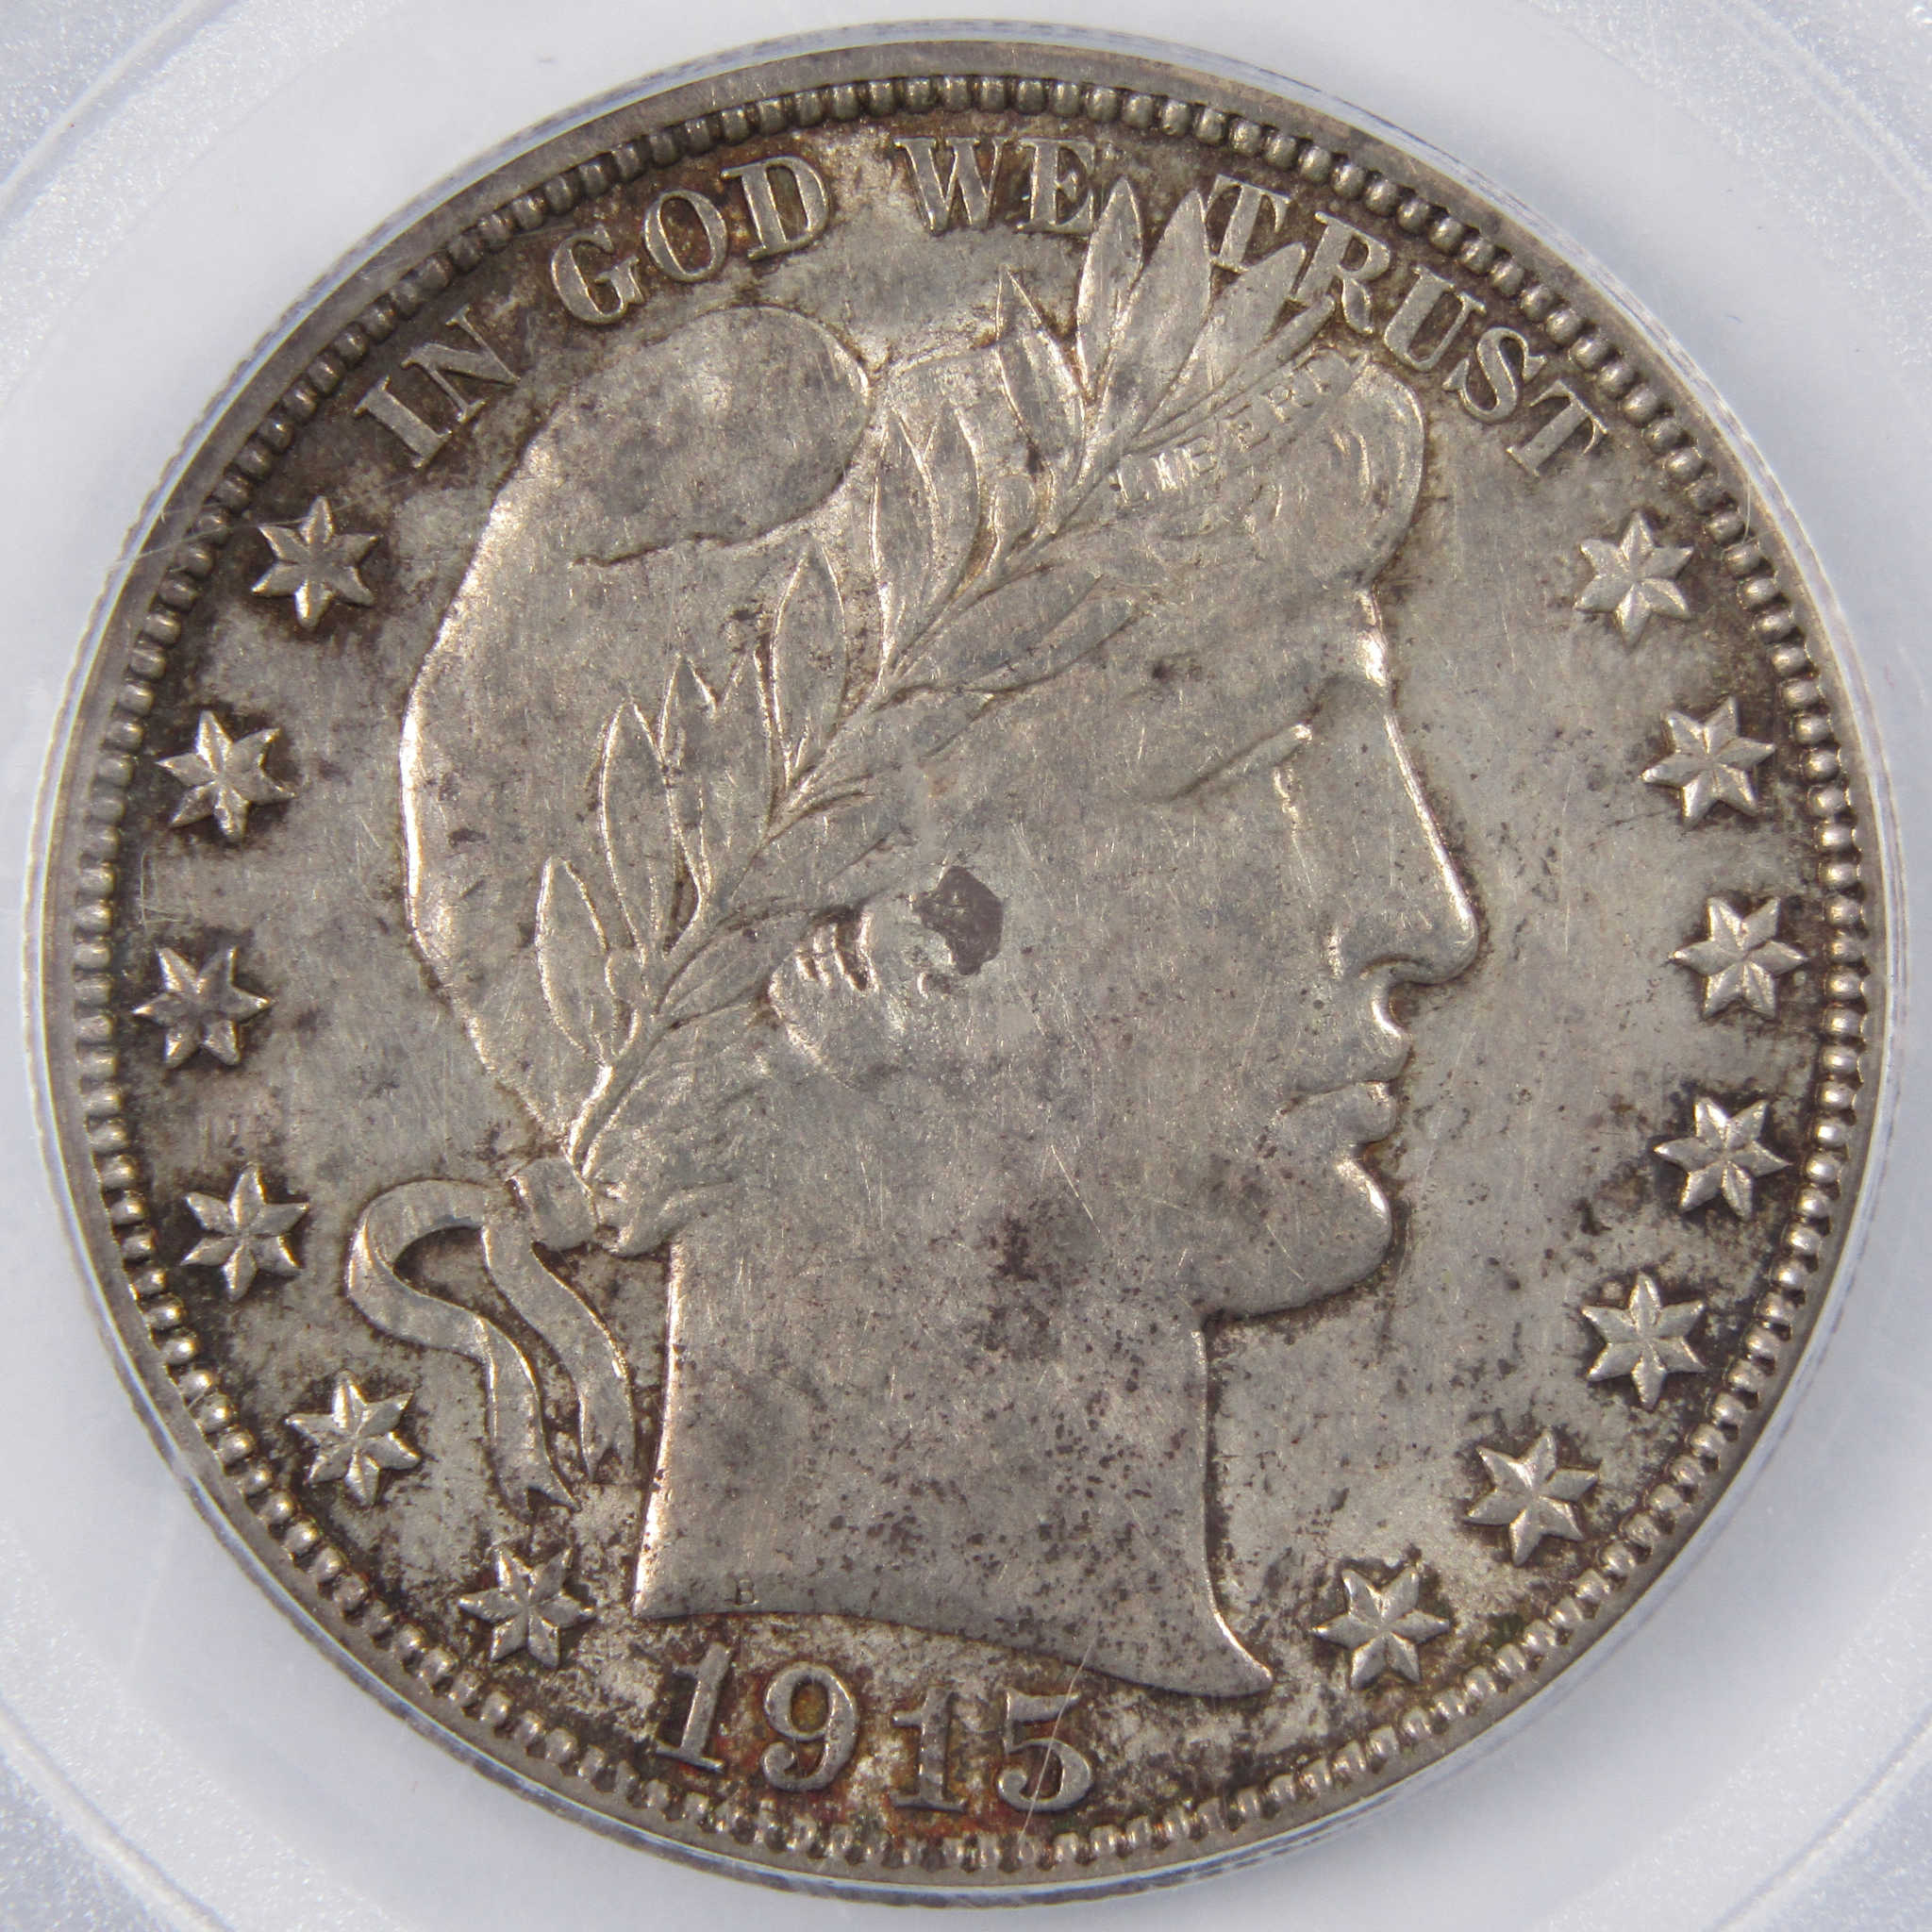 1915 S Barber Half Dollar AU 53 PCGS 90% Silver 50c Coin SKU:I10192